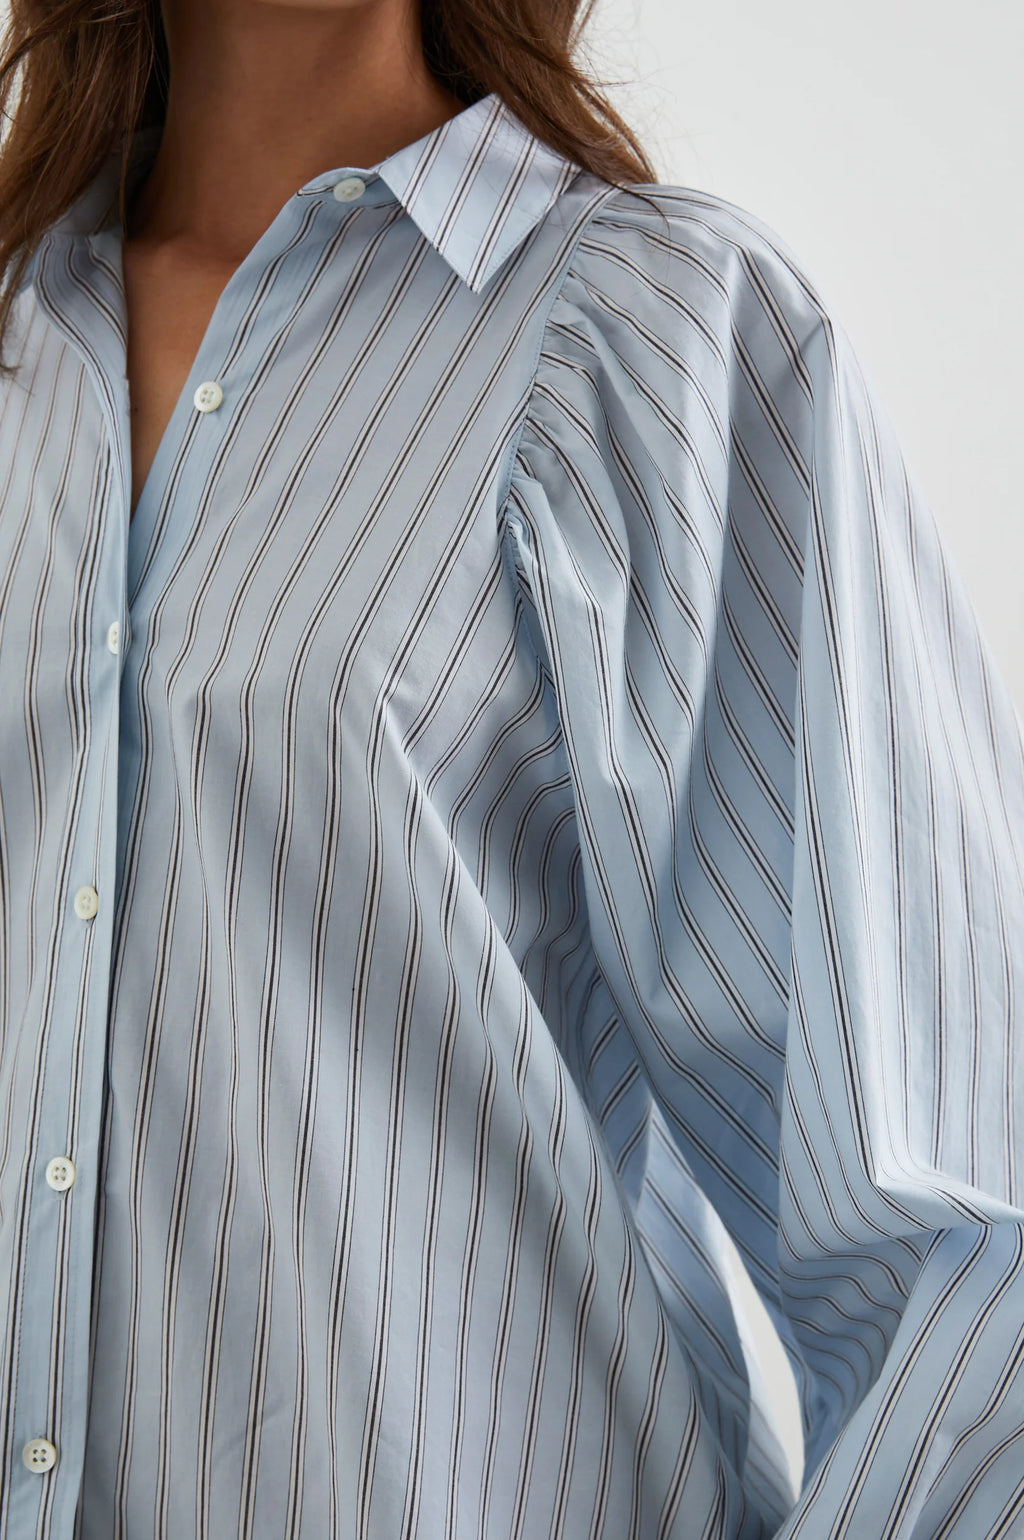 Rails - Livy Striped Shirt